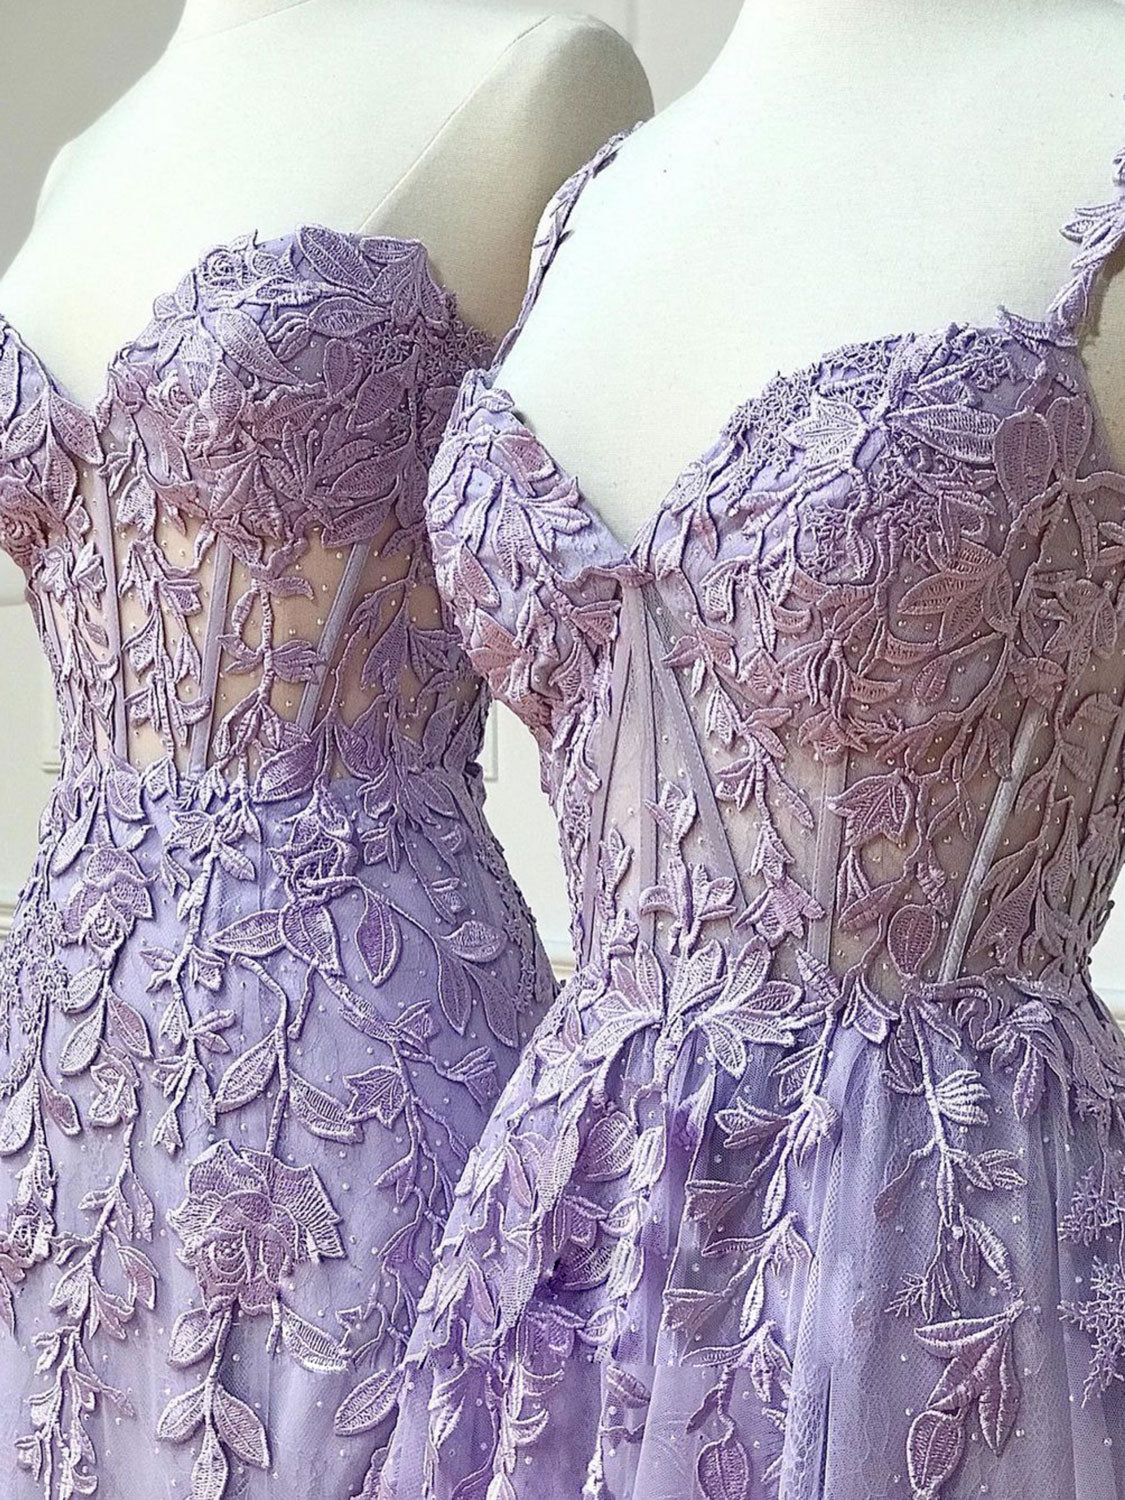 
                  
                    Purple sweetheart neck lace long prom dress, lace formal graduation dress
                  
                